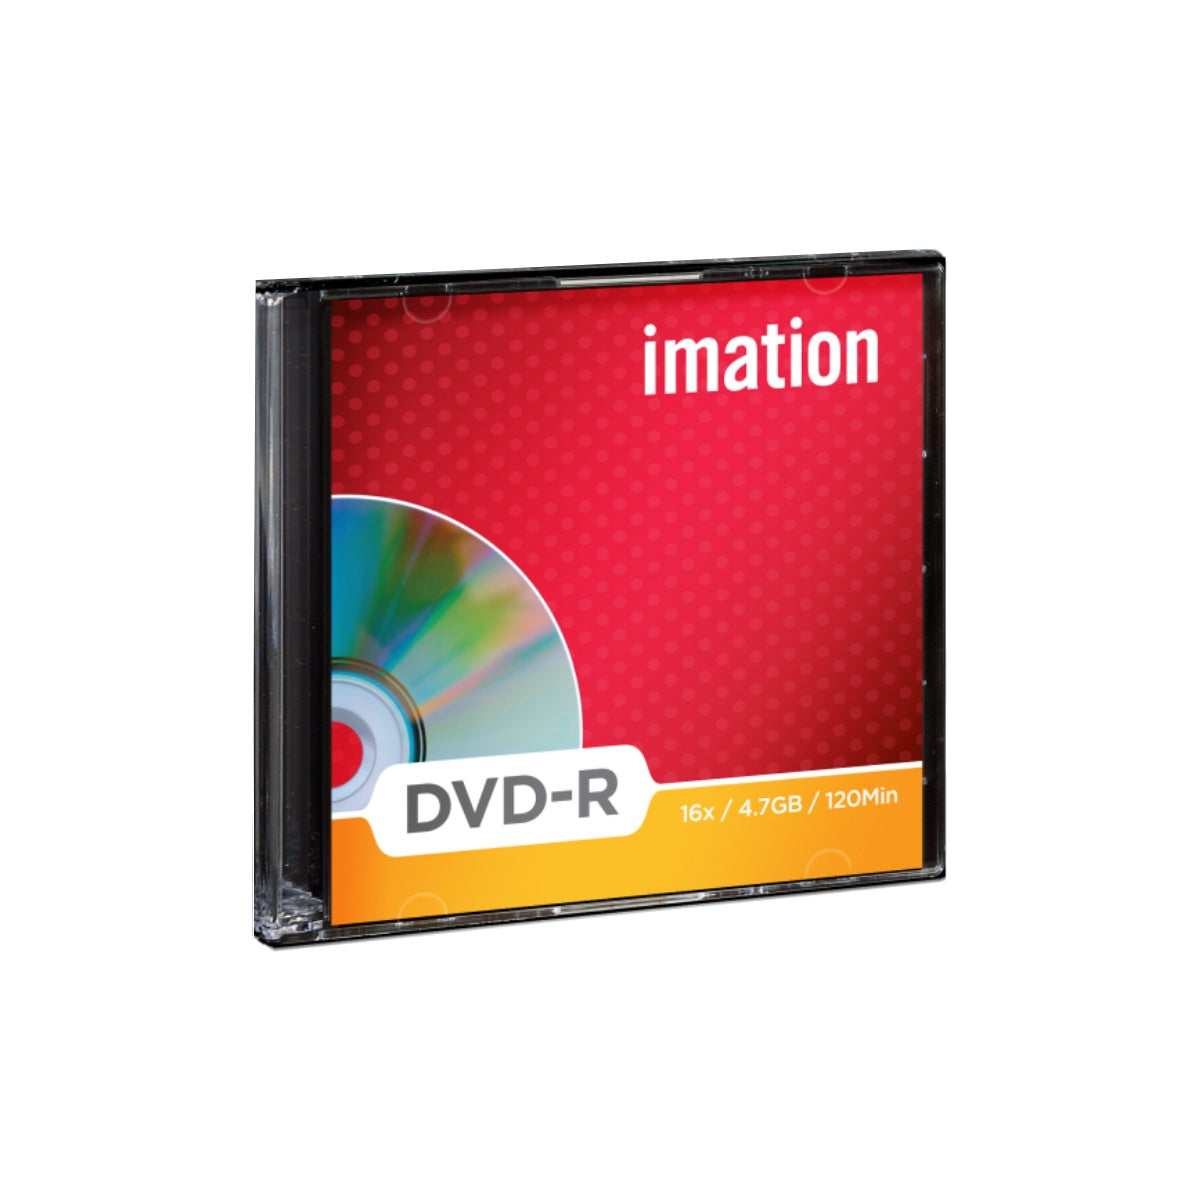 Imation DVD-R 120min, 4.7GB, 16x, in jewel case